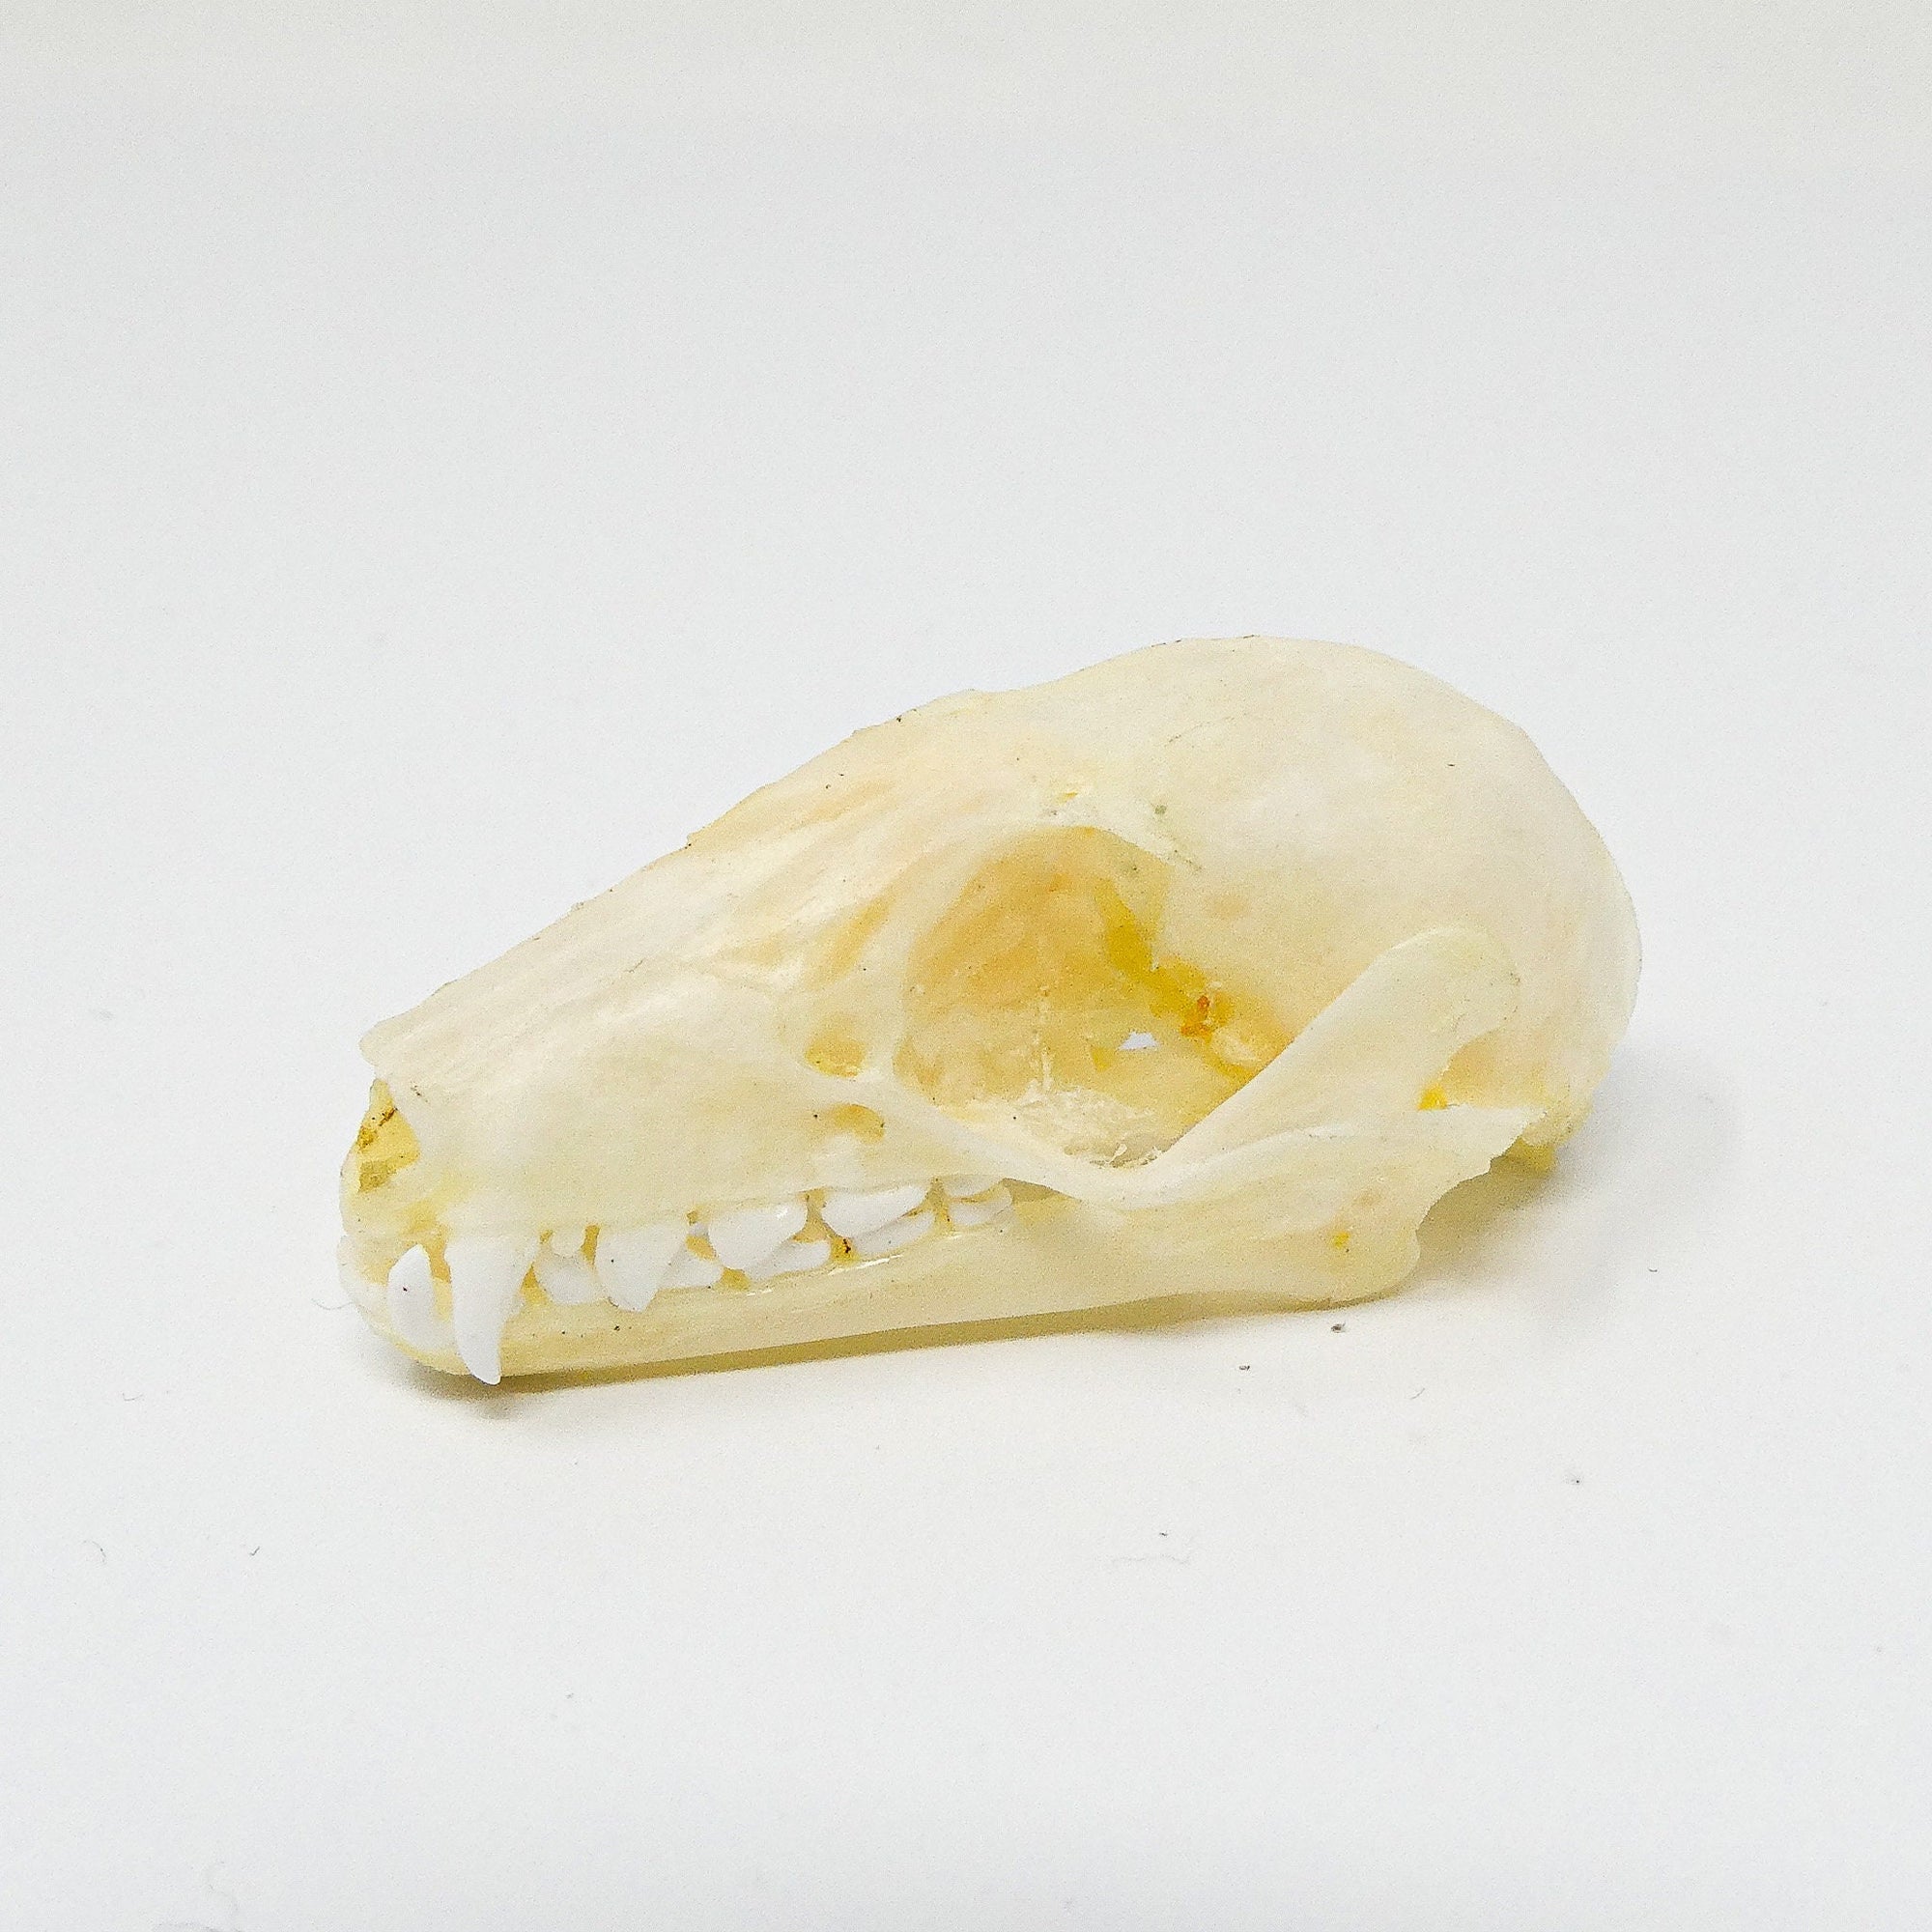 Cave Nectar Bat Skull (Eonycteris spelaea) A1 Preserved Skull 40mm (Non-CITES)